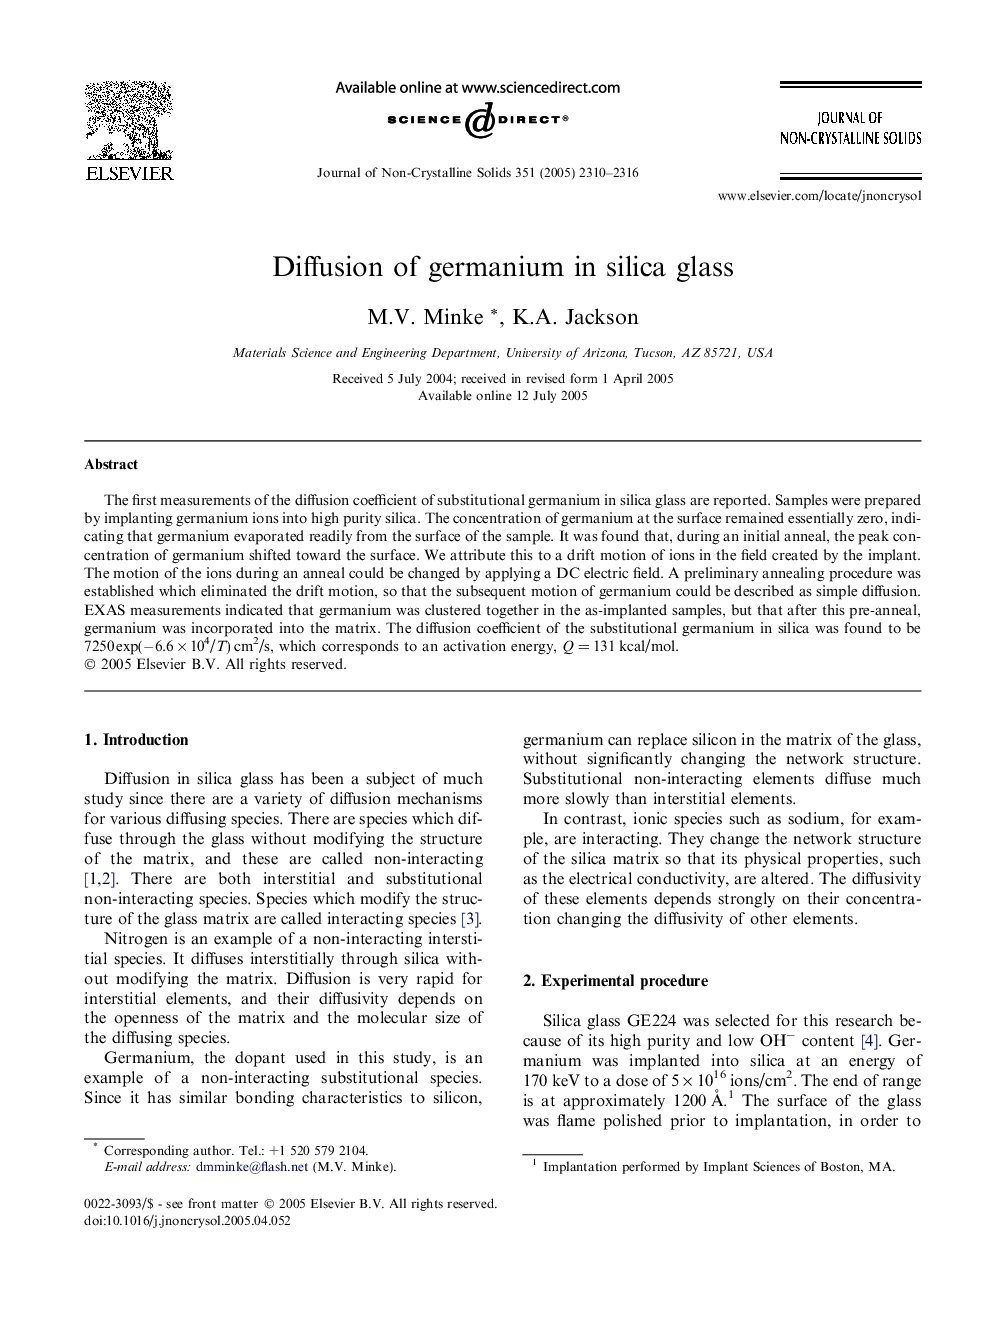 Diffusion of germanium in silica glass